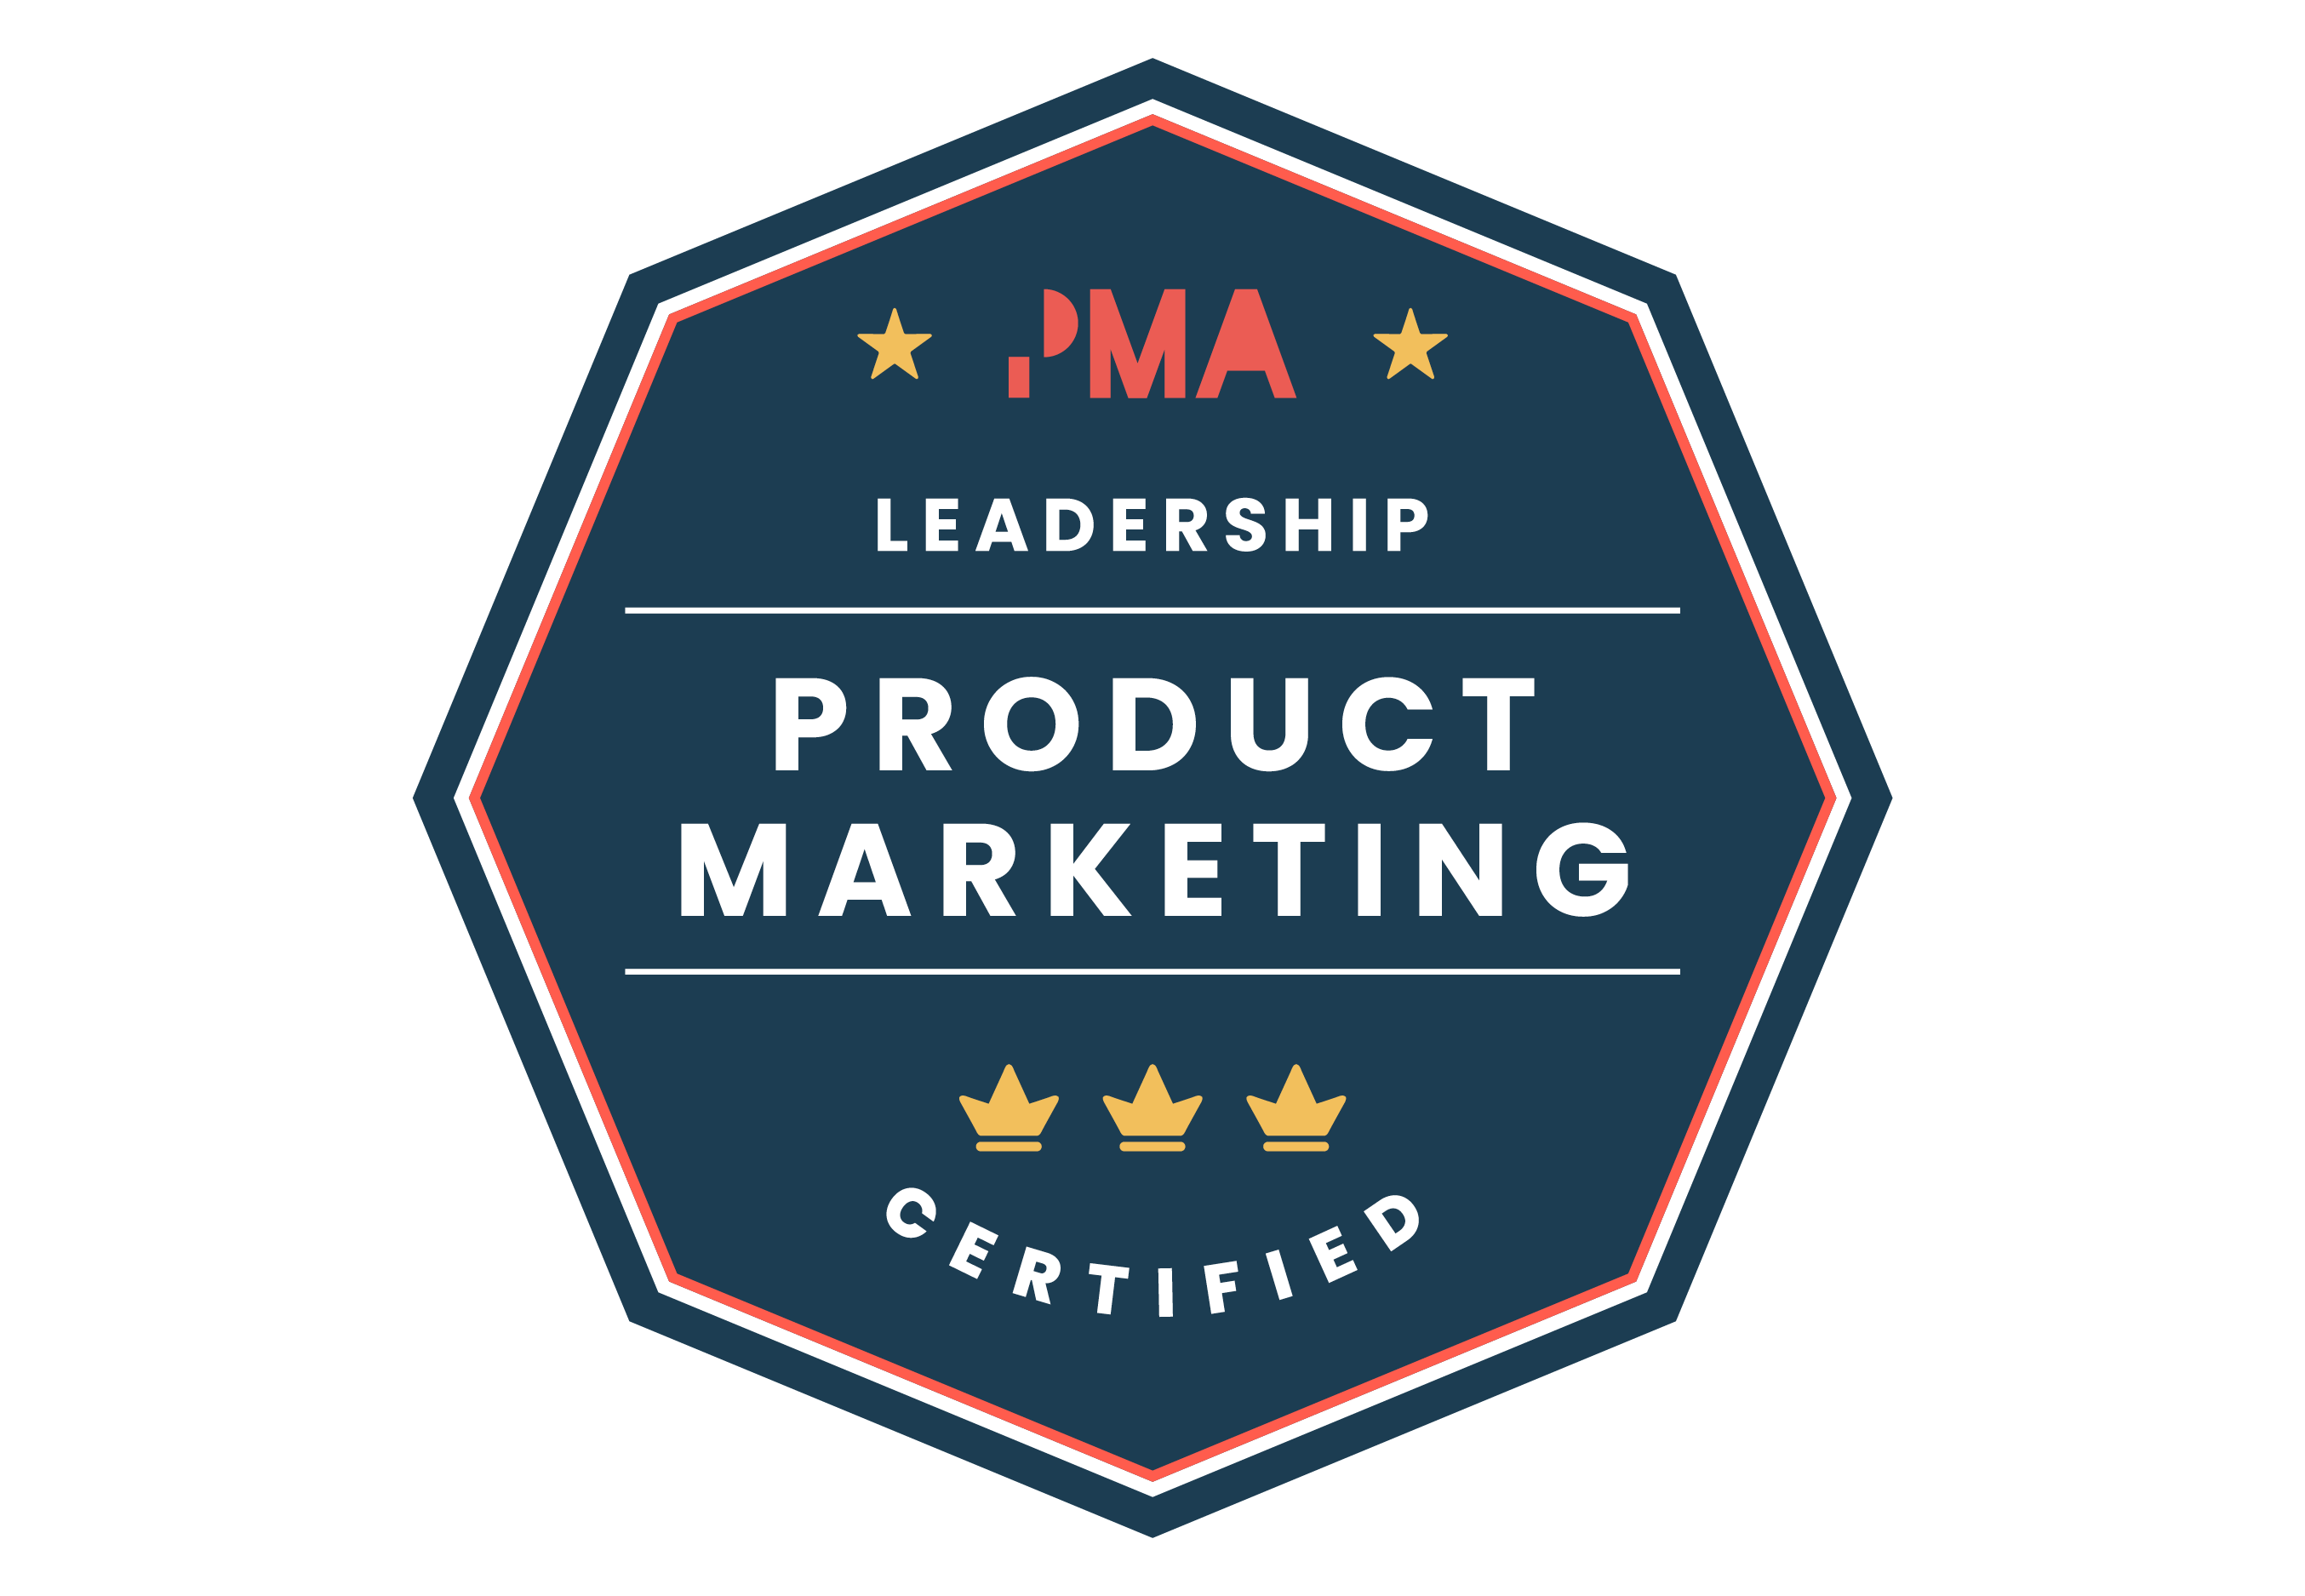 Product Marketing Certified: Leadership badge